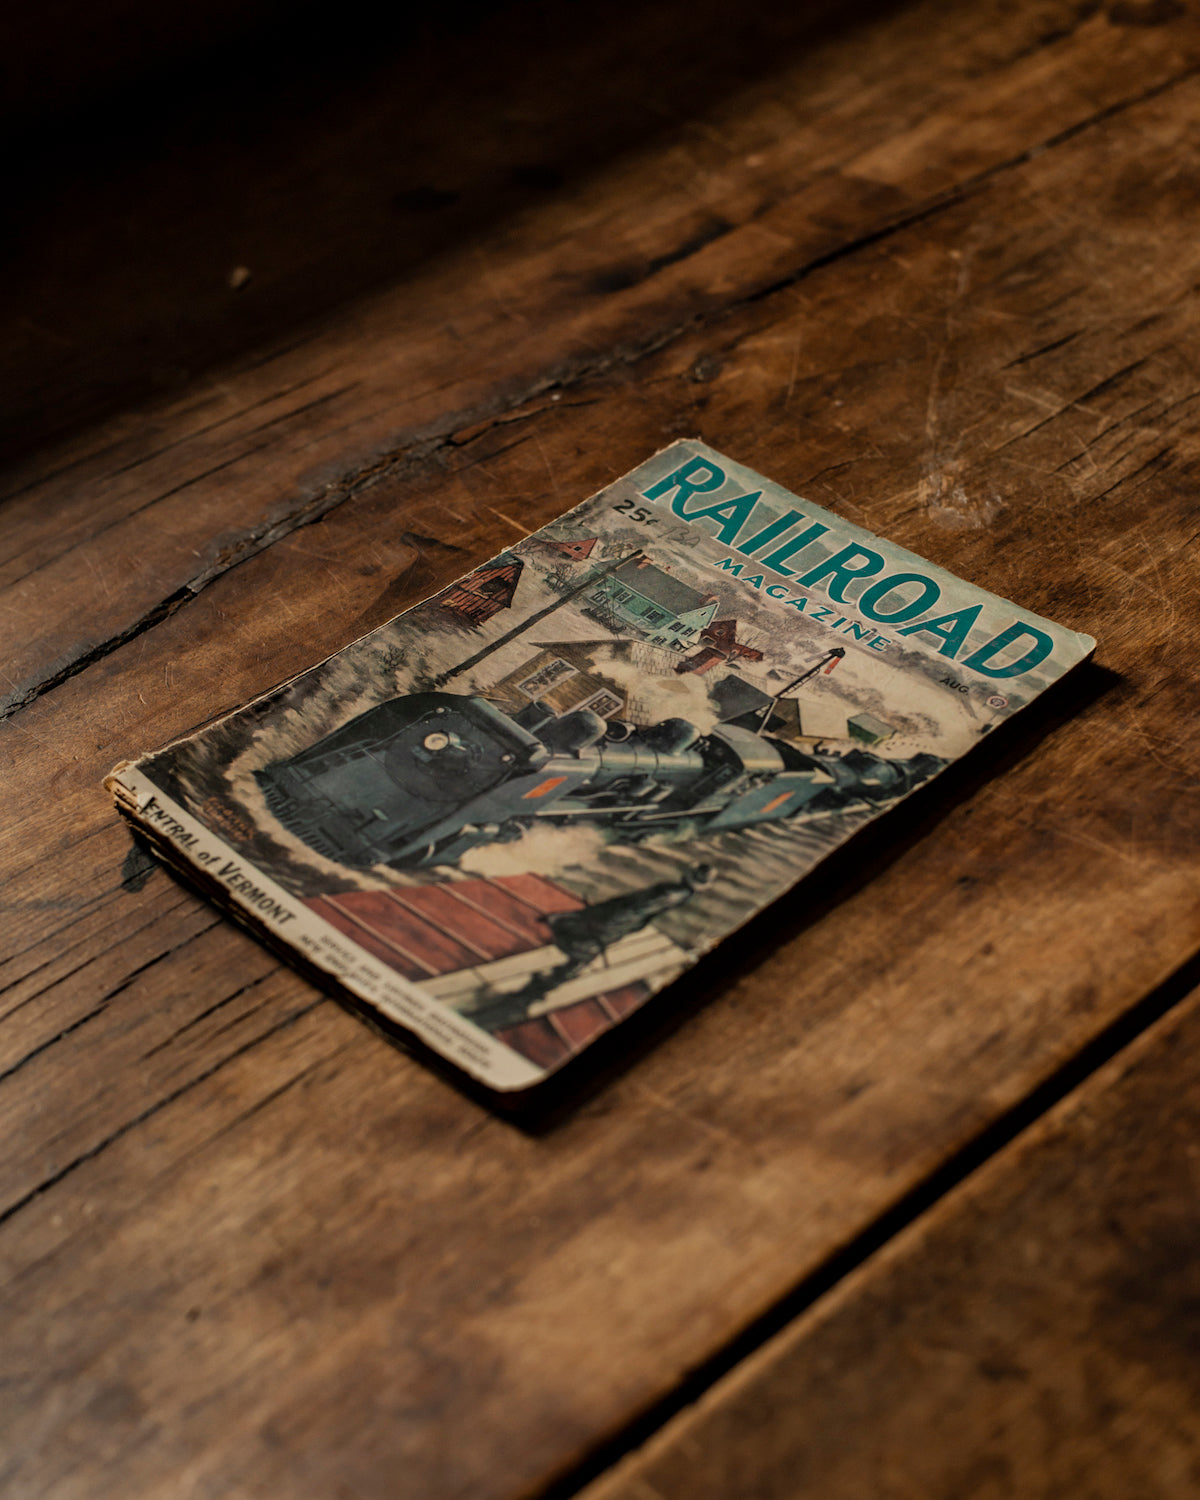 Railroad Magazines